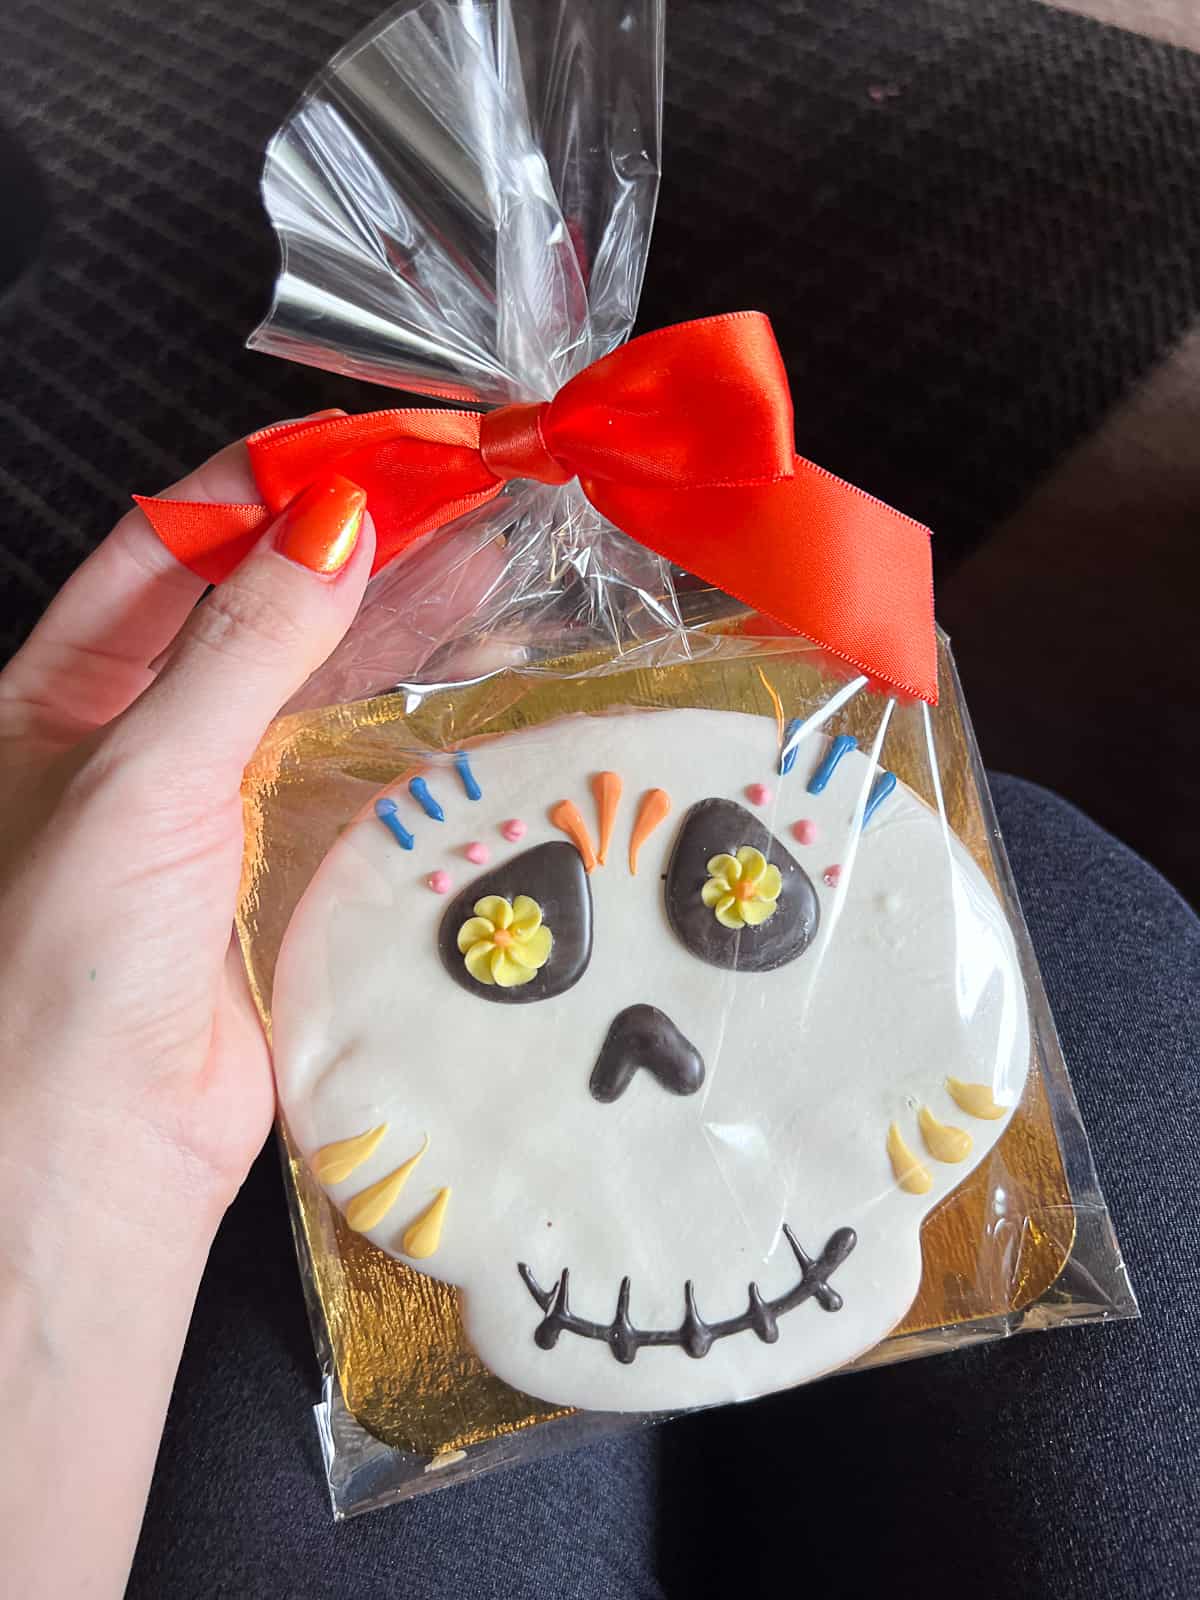 Skull Sugar Cookie Day of The Dead Halloween Treat at Disneyland